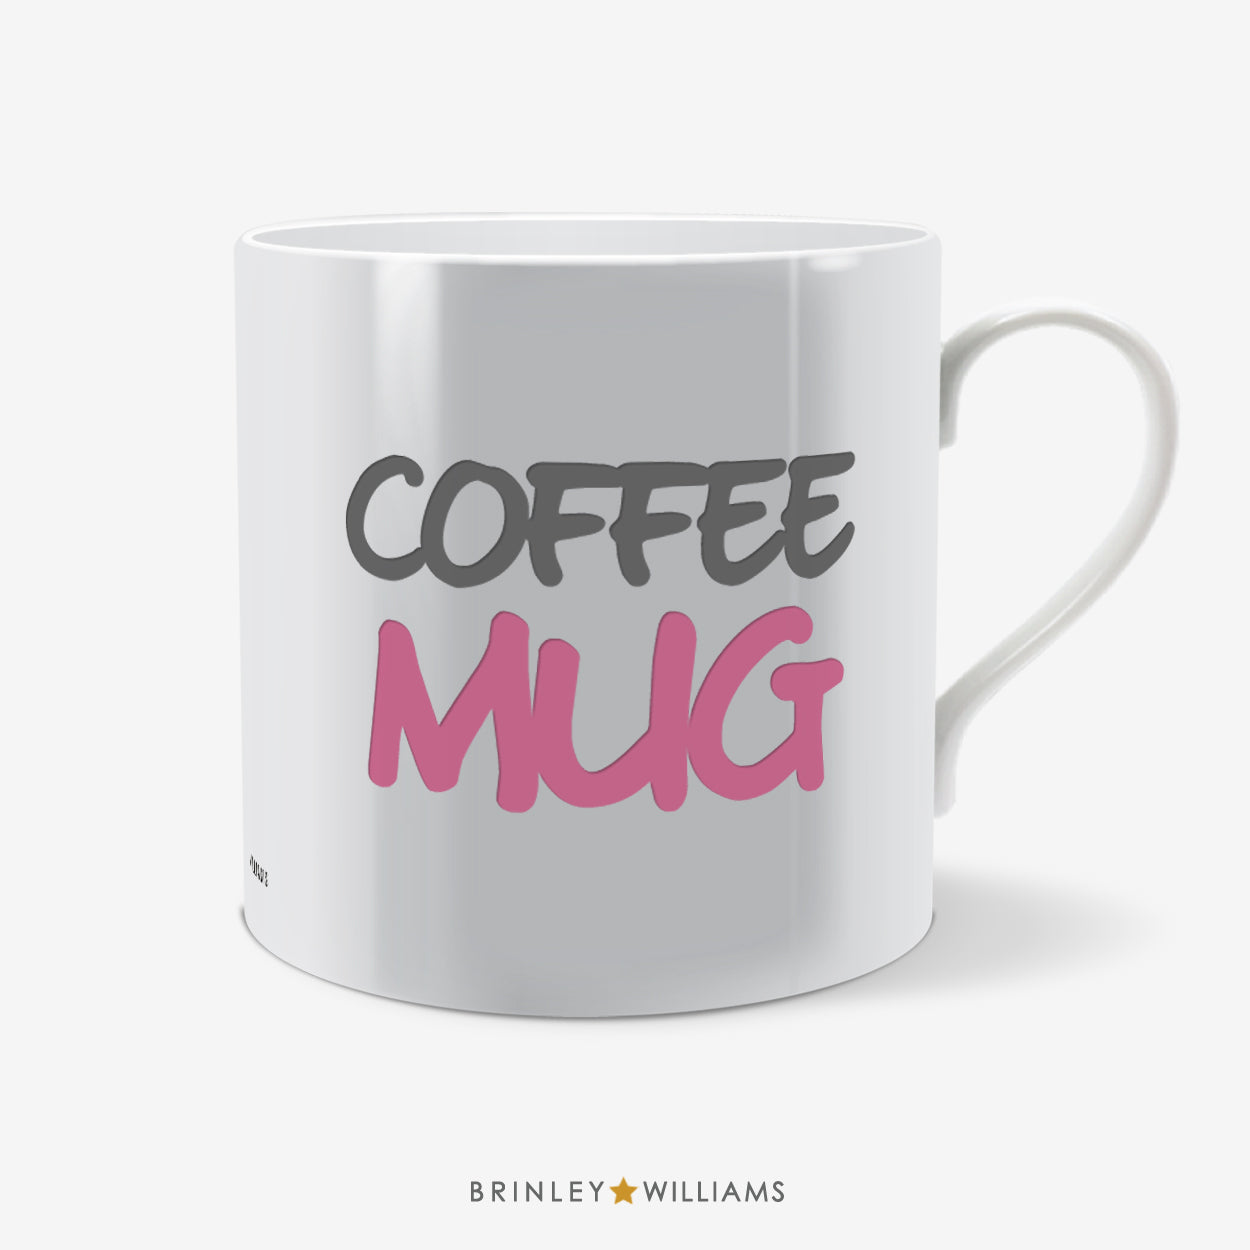 Coffee Mug Fun Mug - Pink